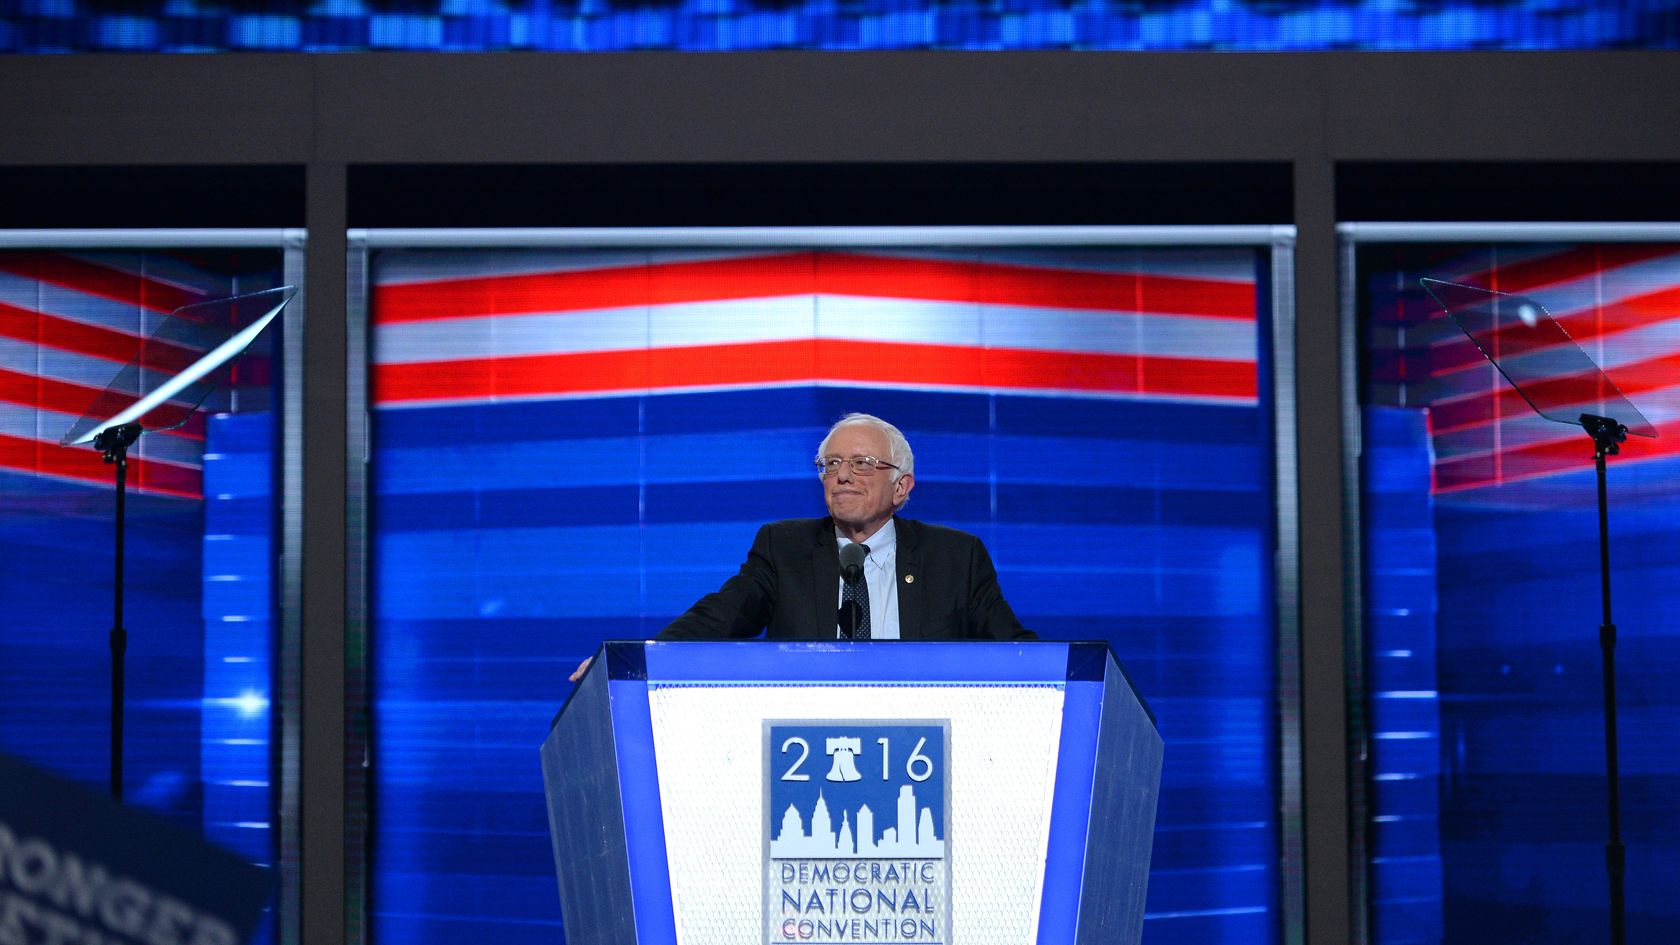 Sanders <a href="http://www.cnn.com/2016/07/25/politics/bernie-sanders-democratic-national-convention-speech/" target="_blank">addresses delegates</a> on the first day of the Democratic National Convention in July 2016.